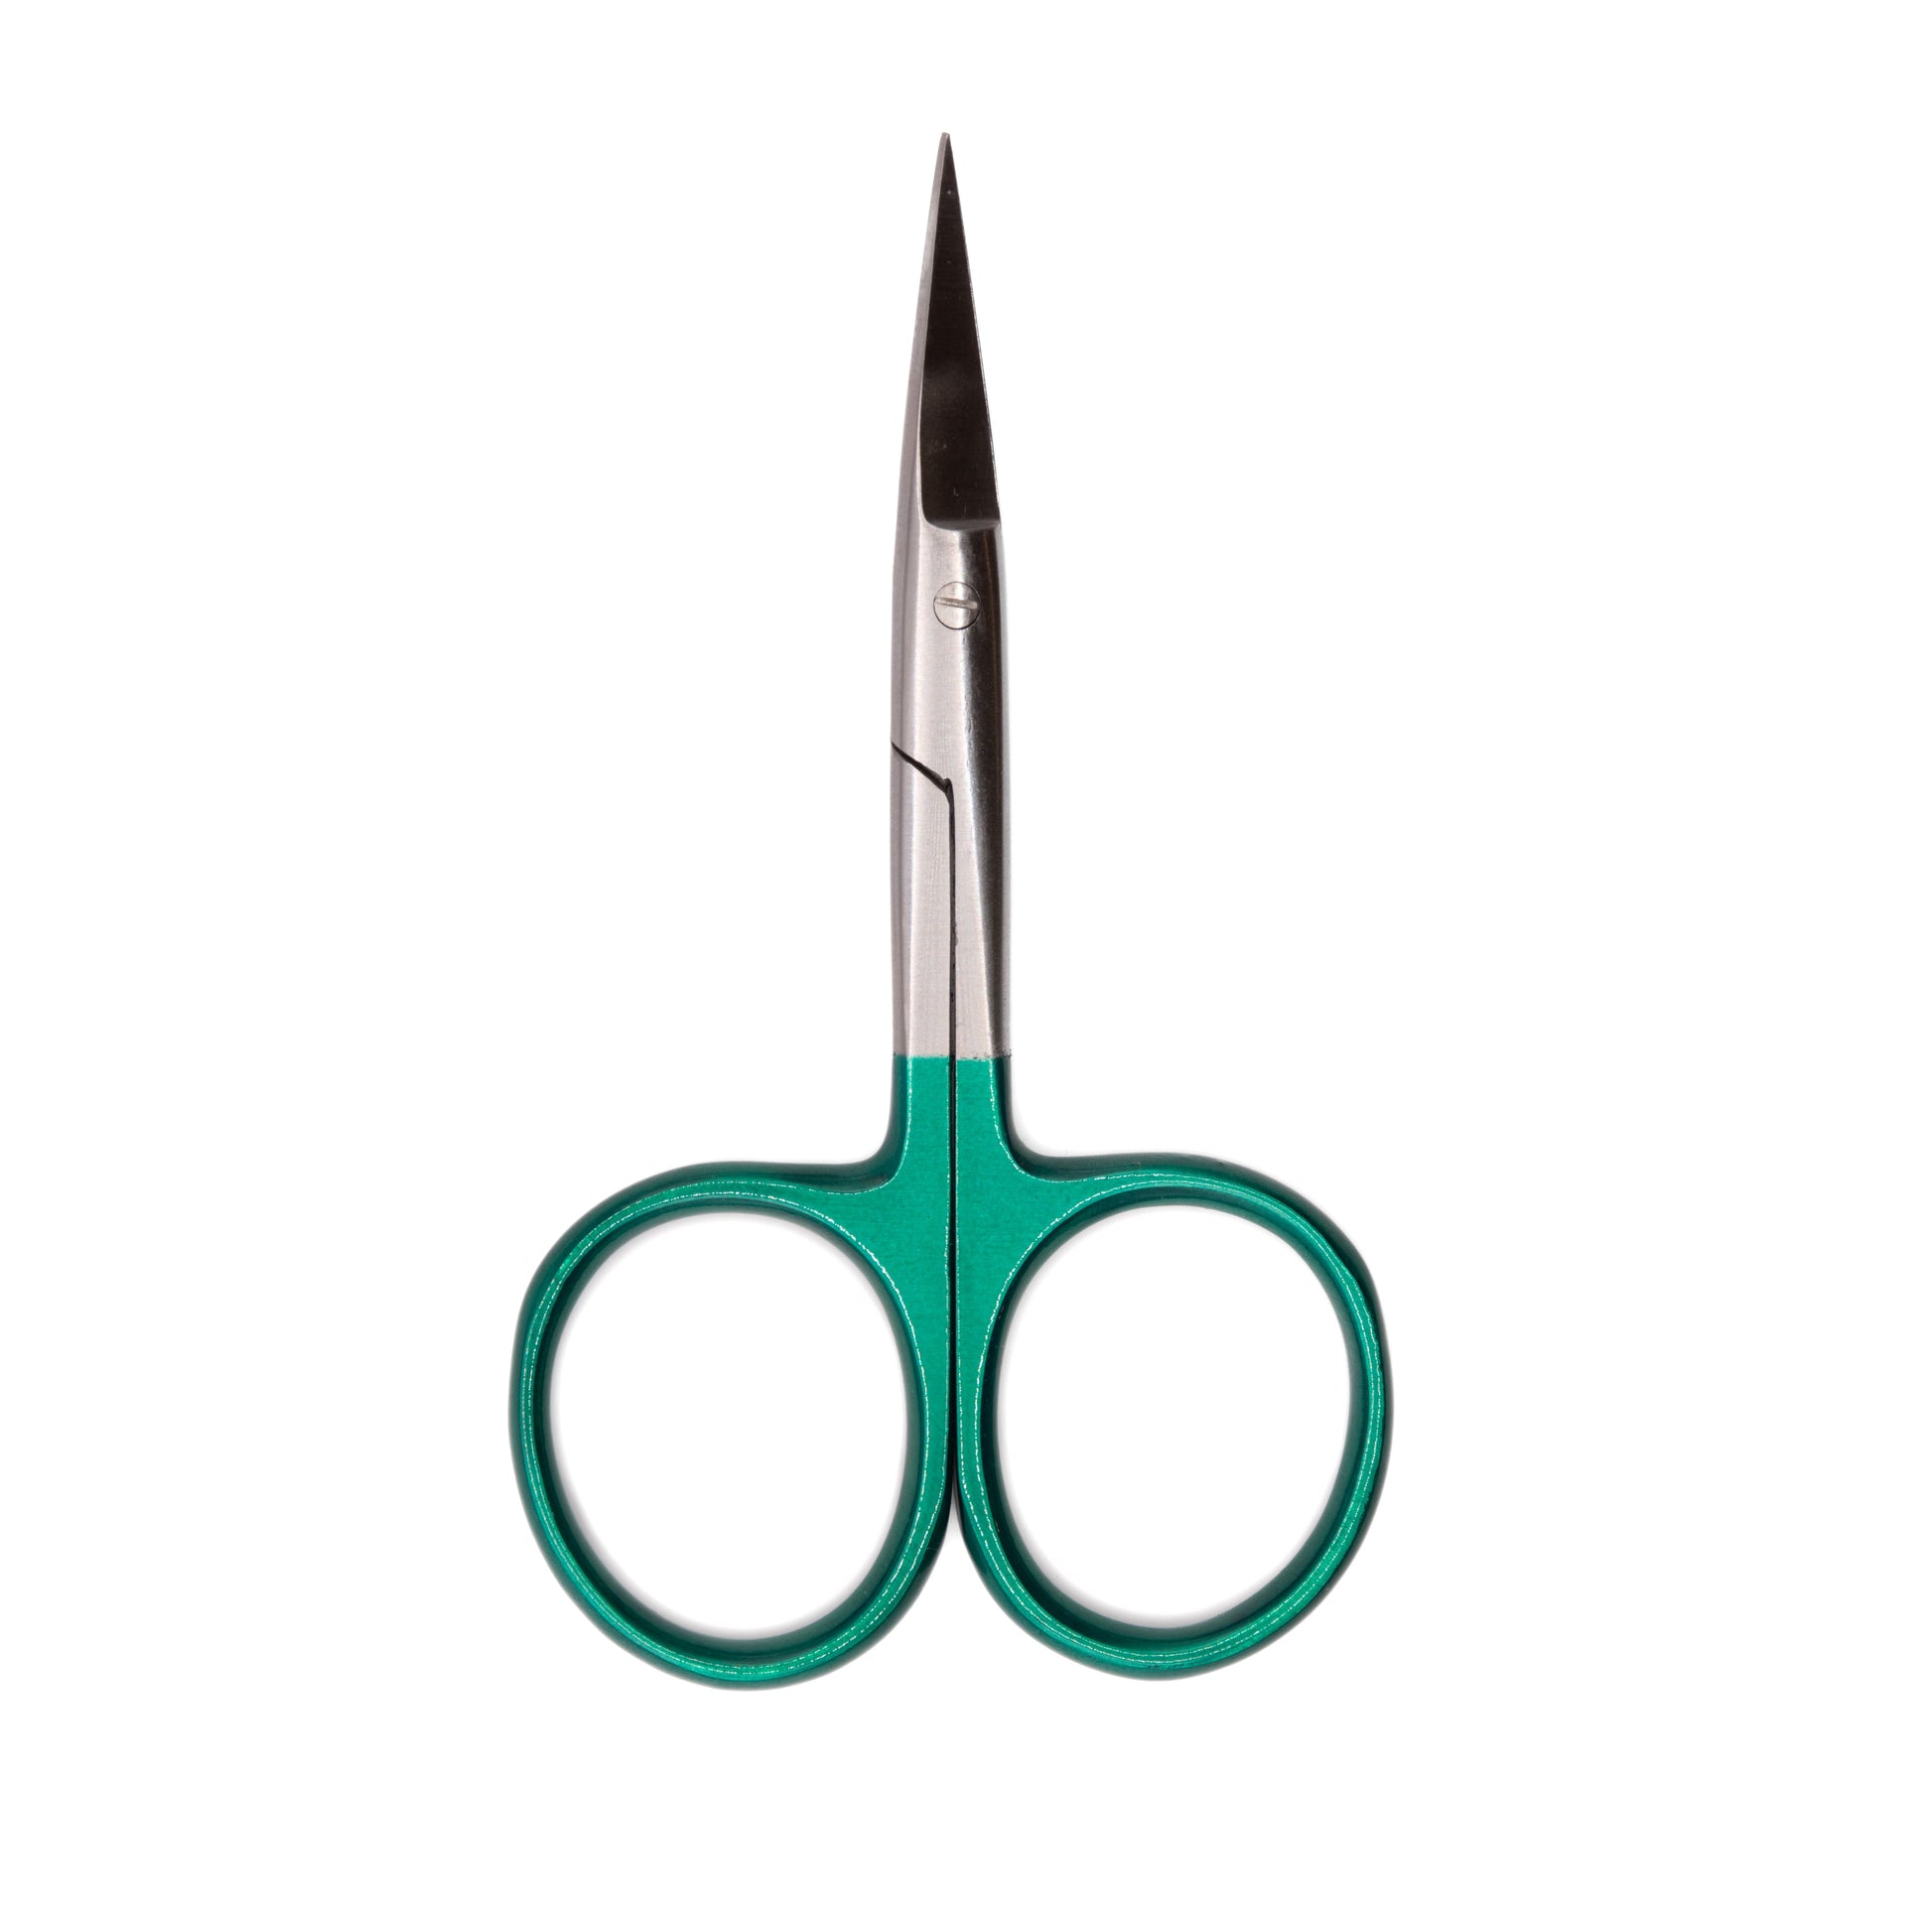 Promotional Utility Scissors  Wholesale Magnetic Scissors with Logos